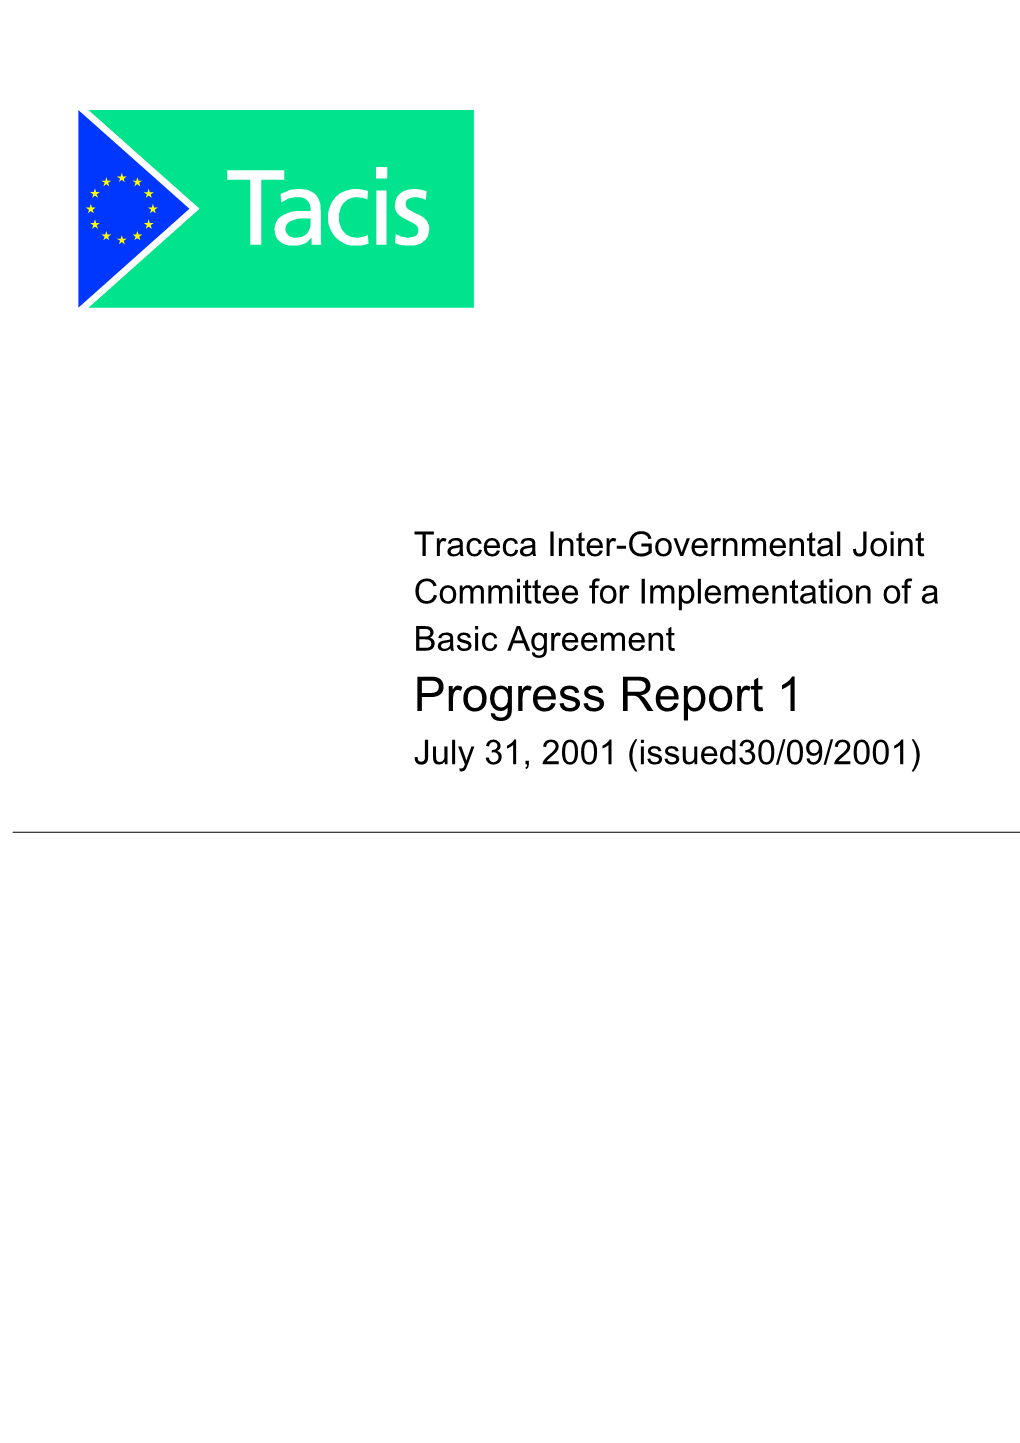 Progress Report 1 July 31, 2001 (Issued30/09/2001)